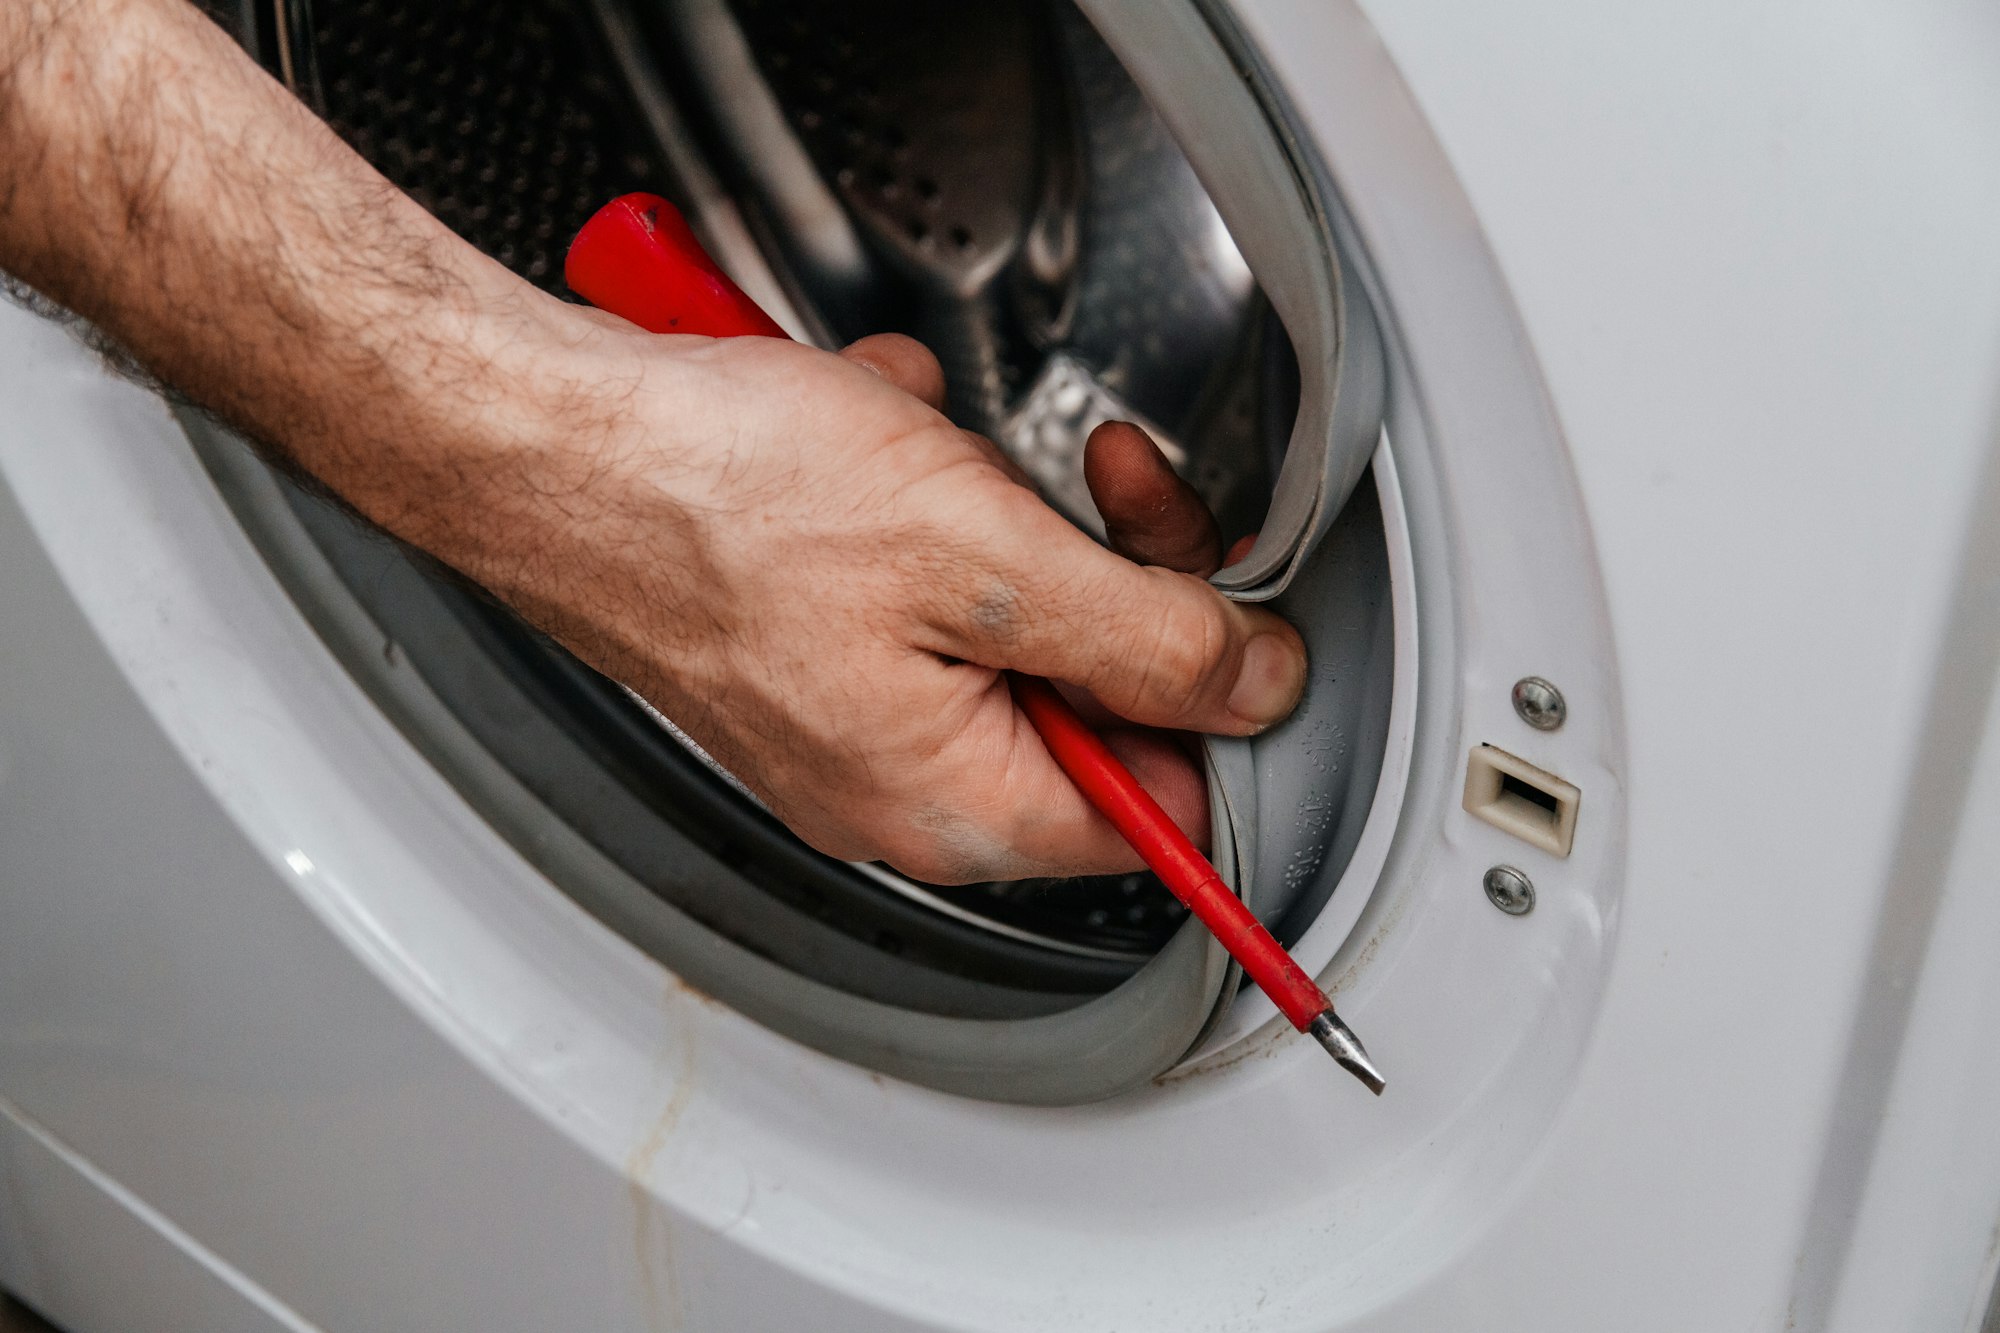 Handyman repairing a washing machine. The hands of a man repair a washing machine.